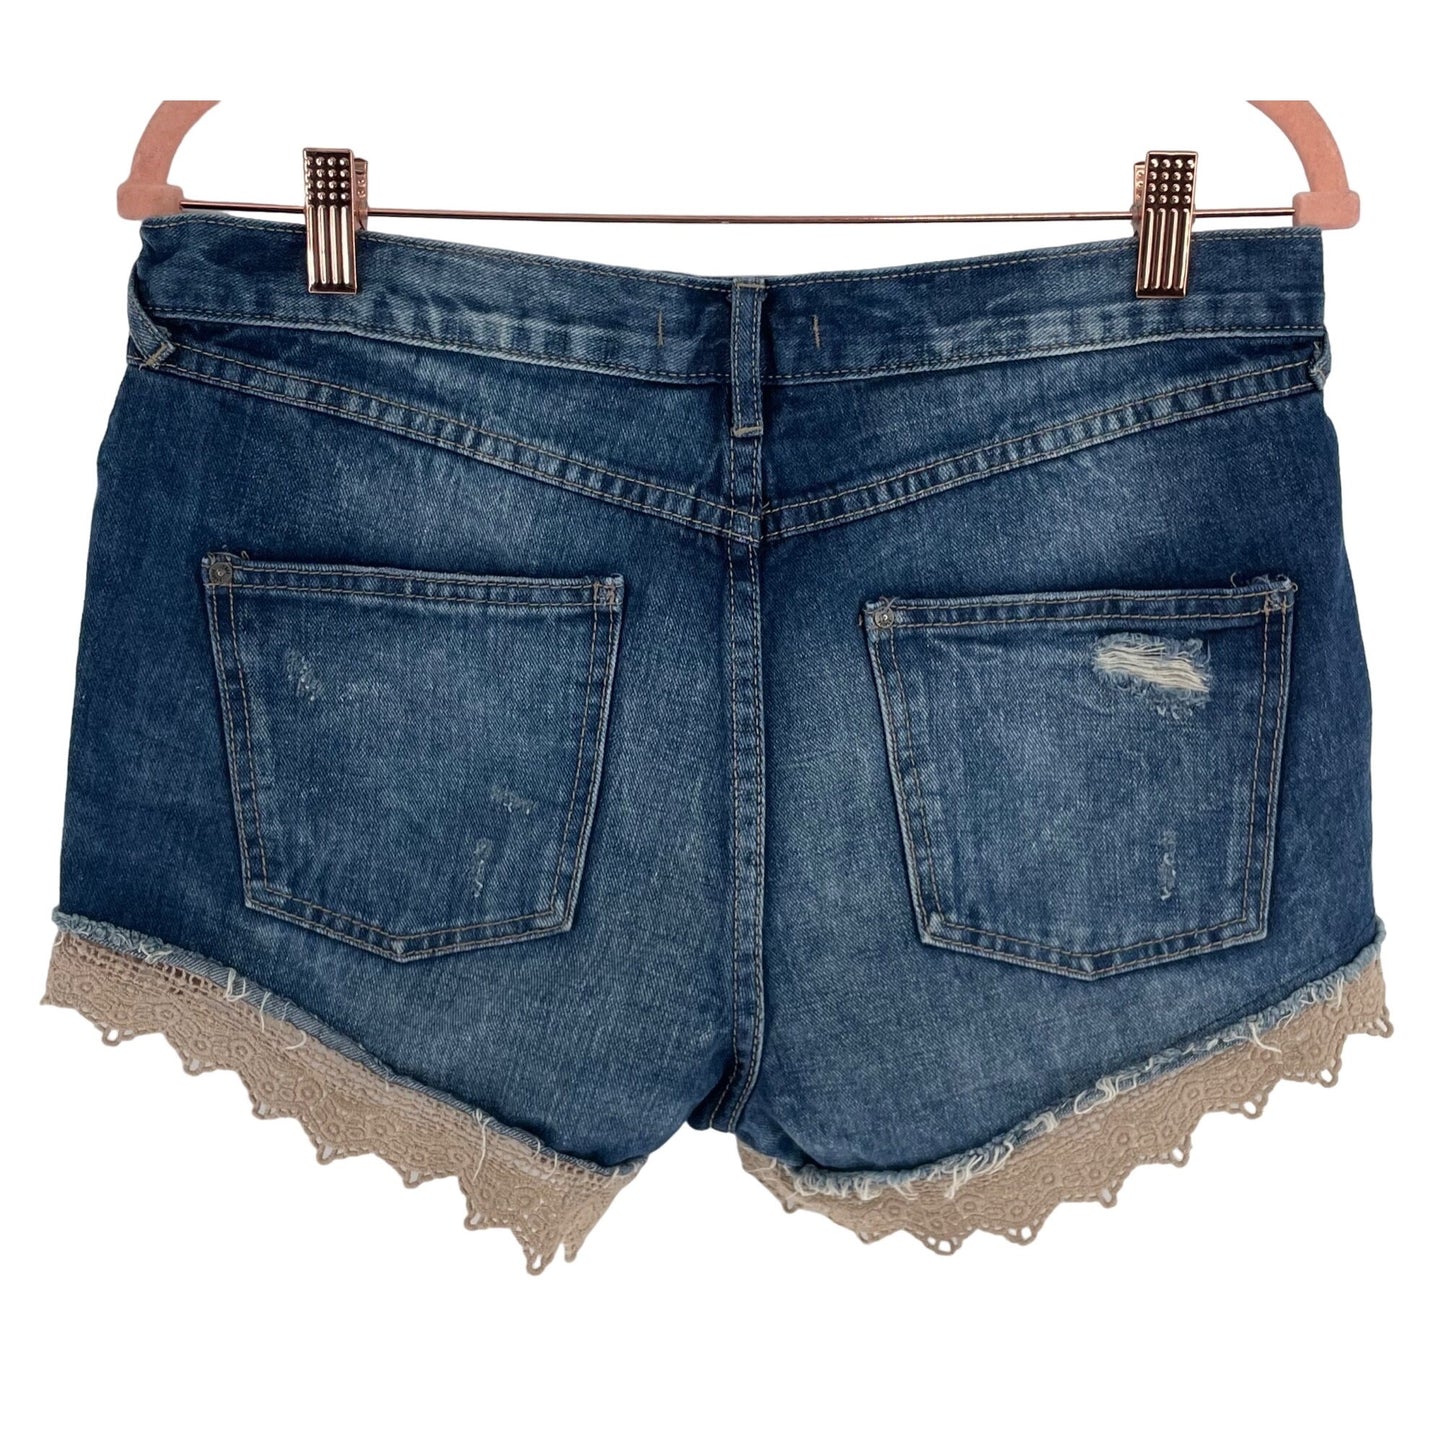 Free People Women's Size W 28 Distressed Blue Jean Denim Shorts W/ Lace Hem